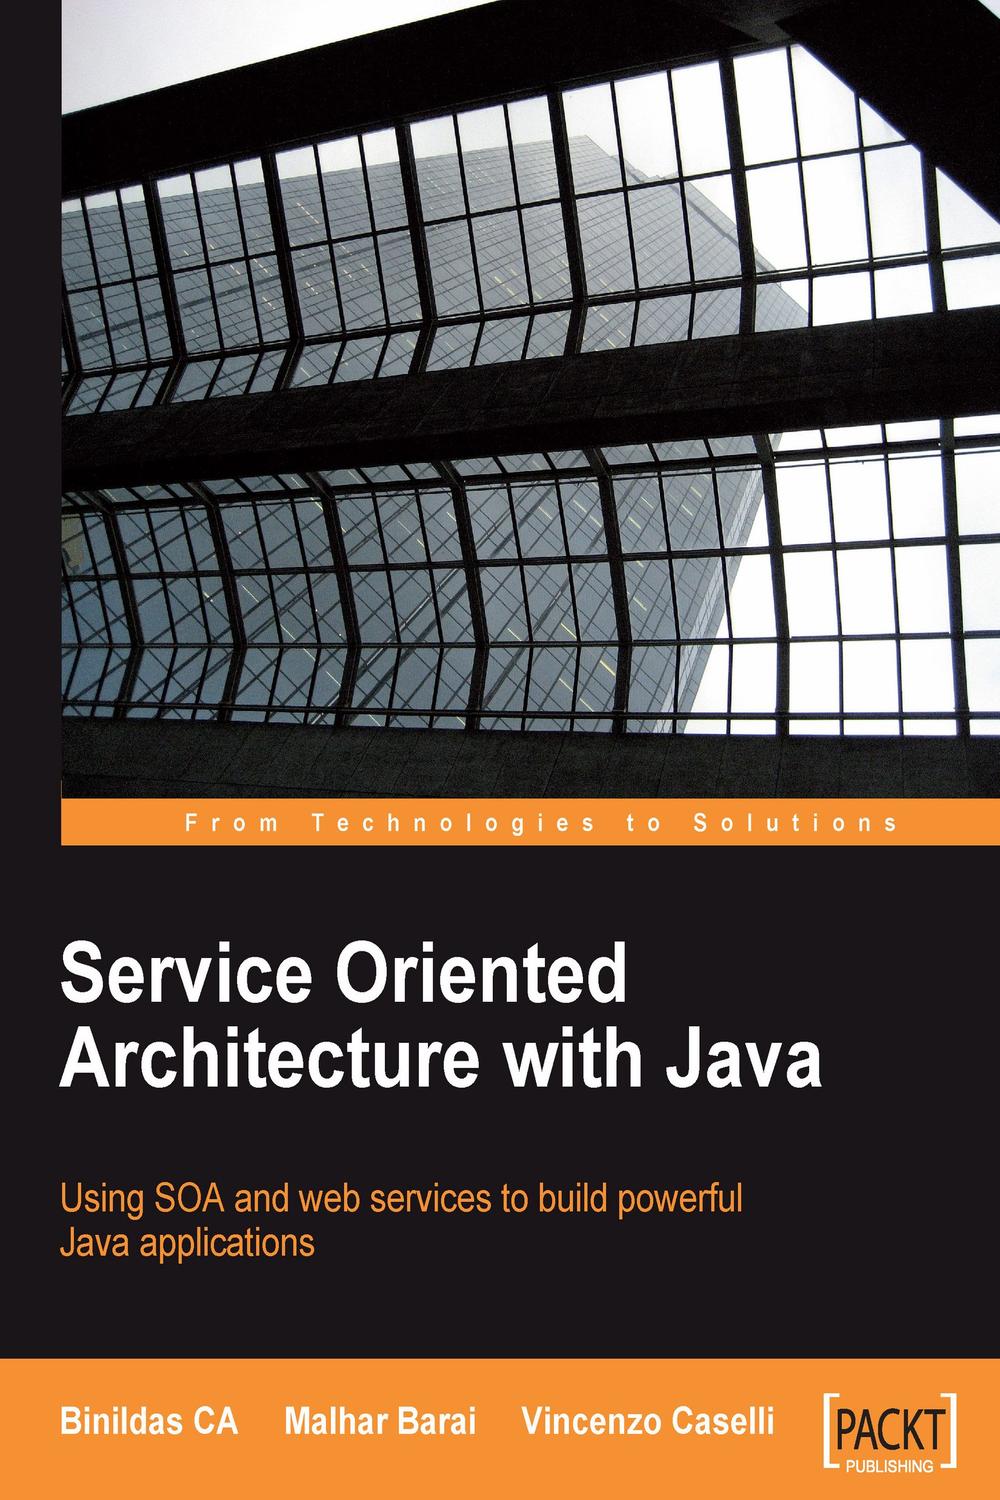 Service Oriented Architecture with Java - Binildas CA, Malhar Barai, Vincenzo Caselli